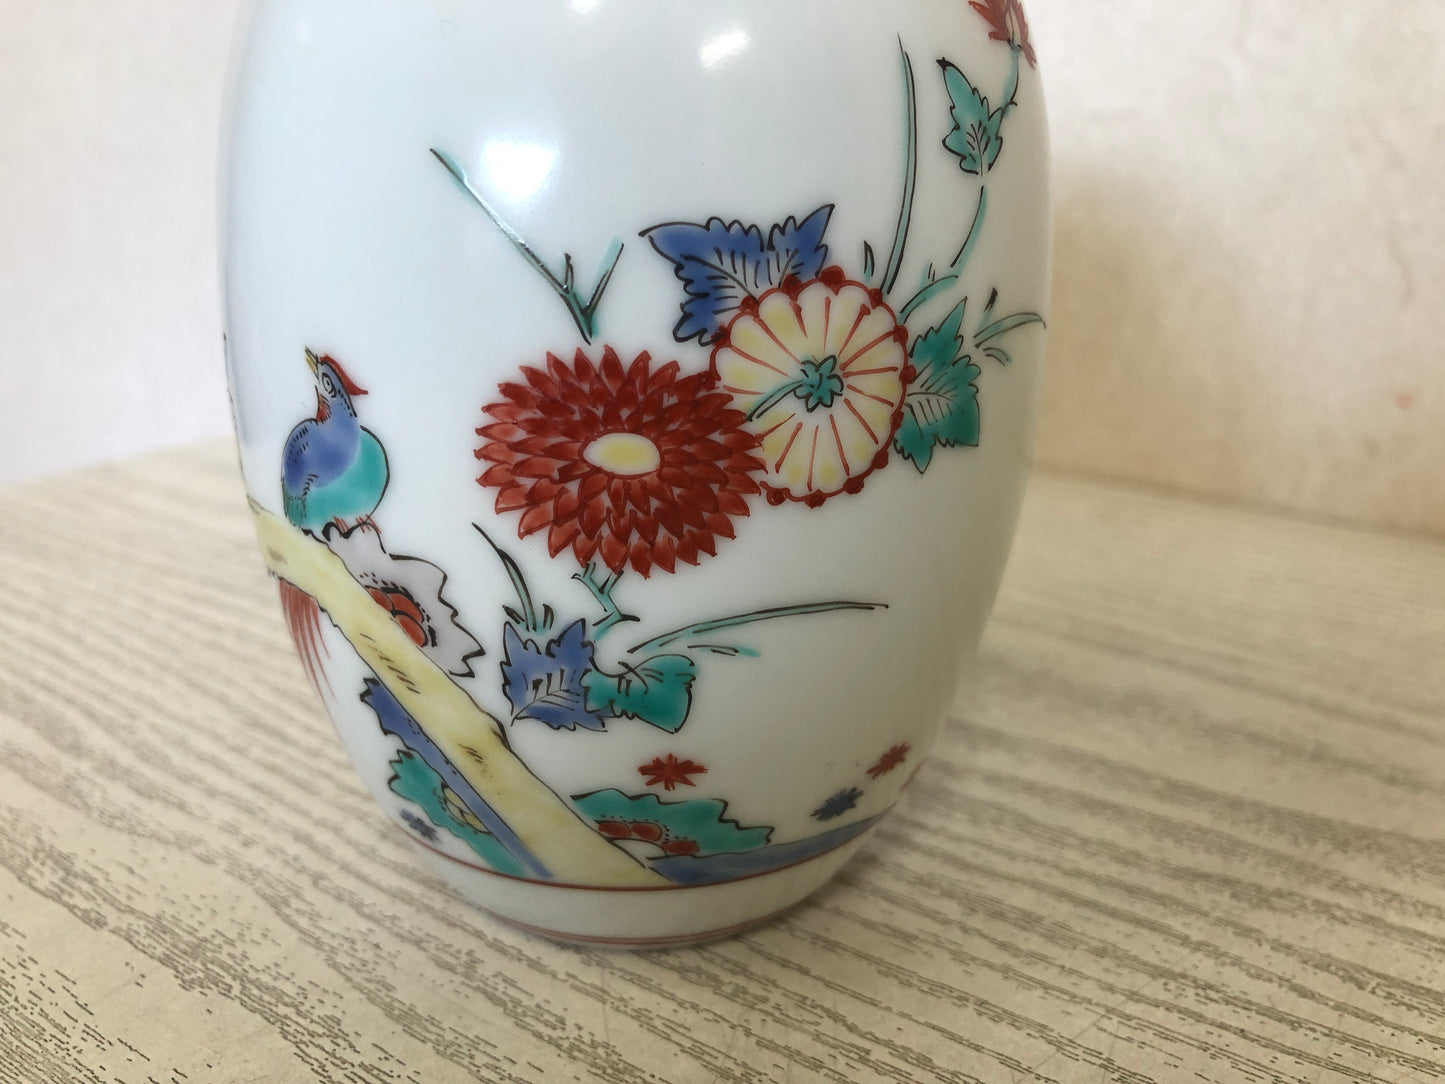 Y3811 FLOWER VASE Arita-ware signed box Japan ikebana decor interior antique